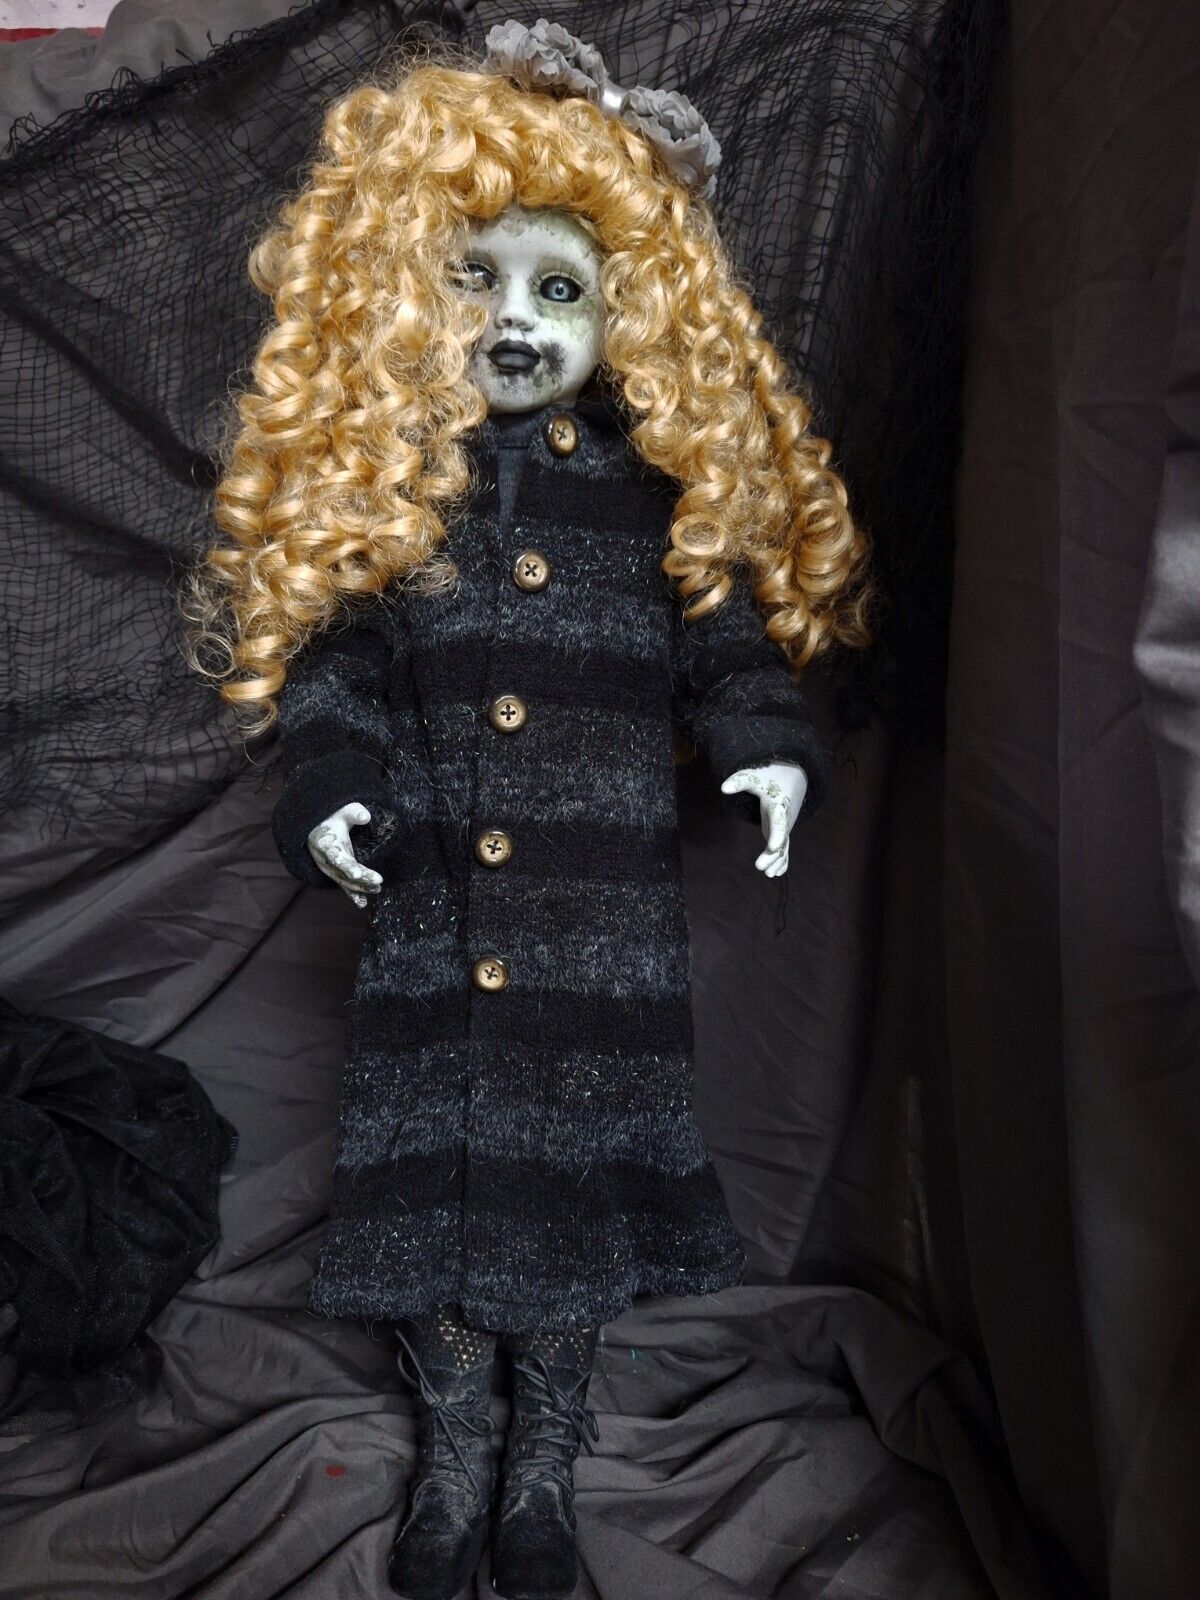 OOAK Creepy Gothic Doll, Handpainted, 20 In Tall, Halloween Prop